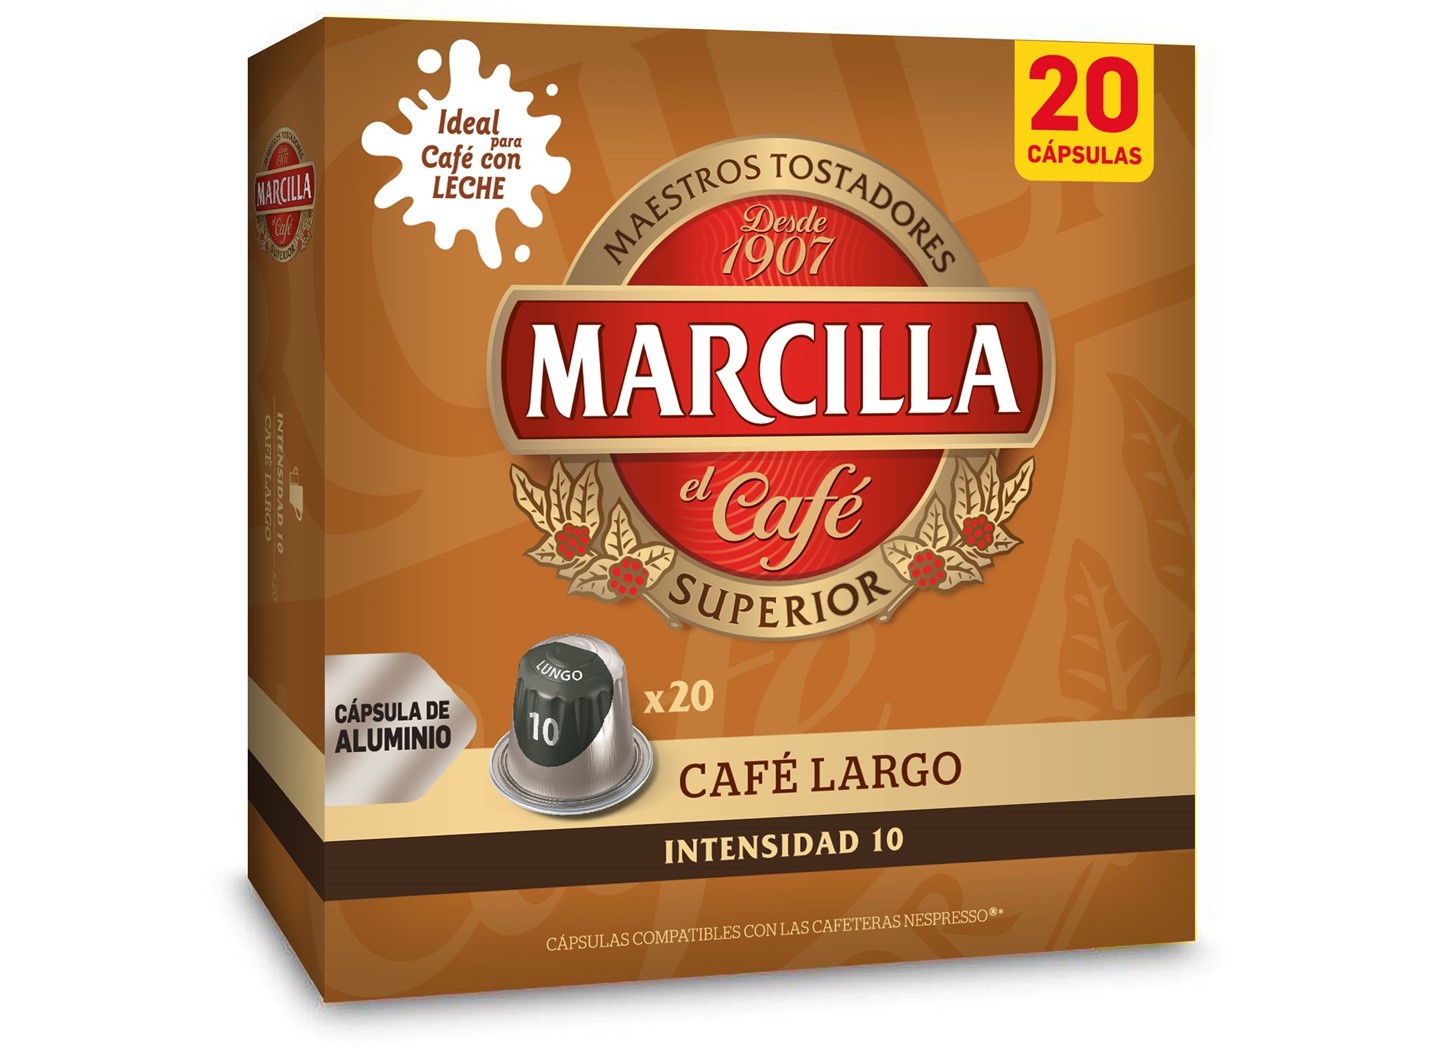  Tassimo Marcilla Cafe Largo - Cápsulas de café para